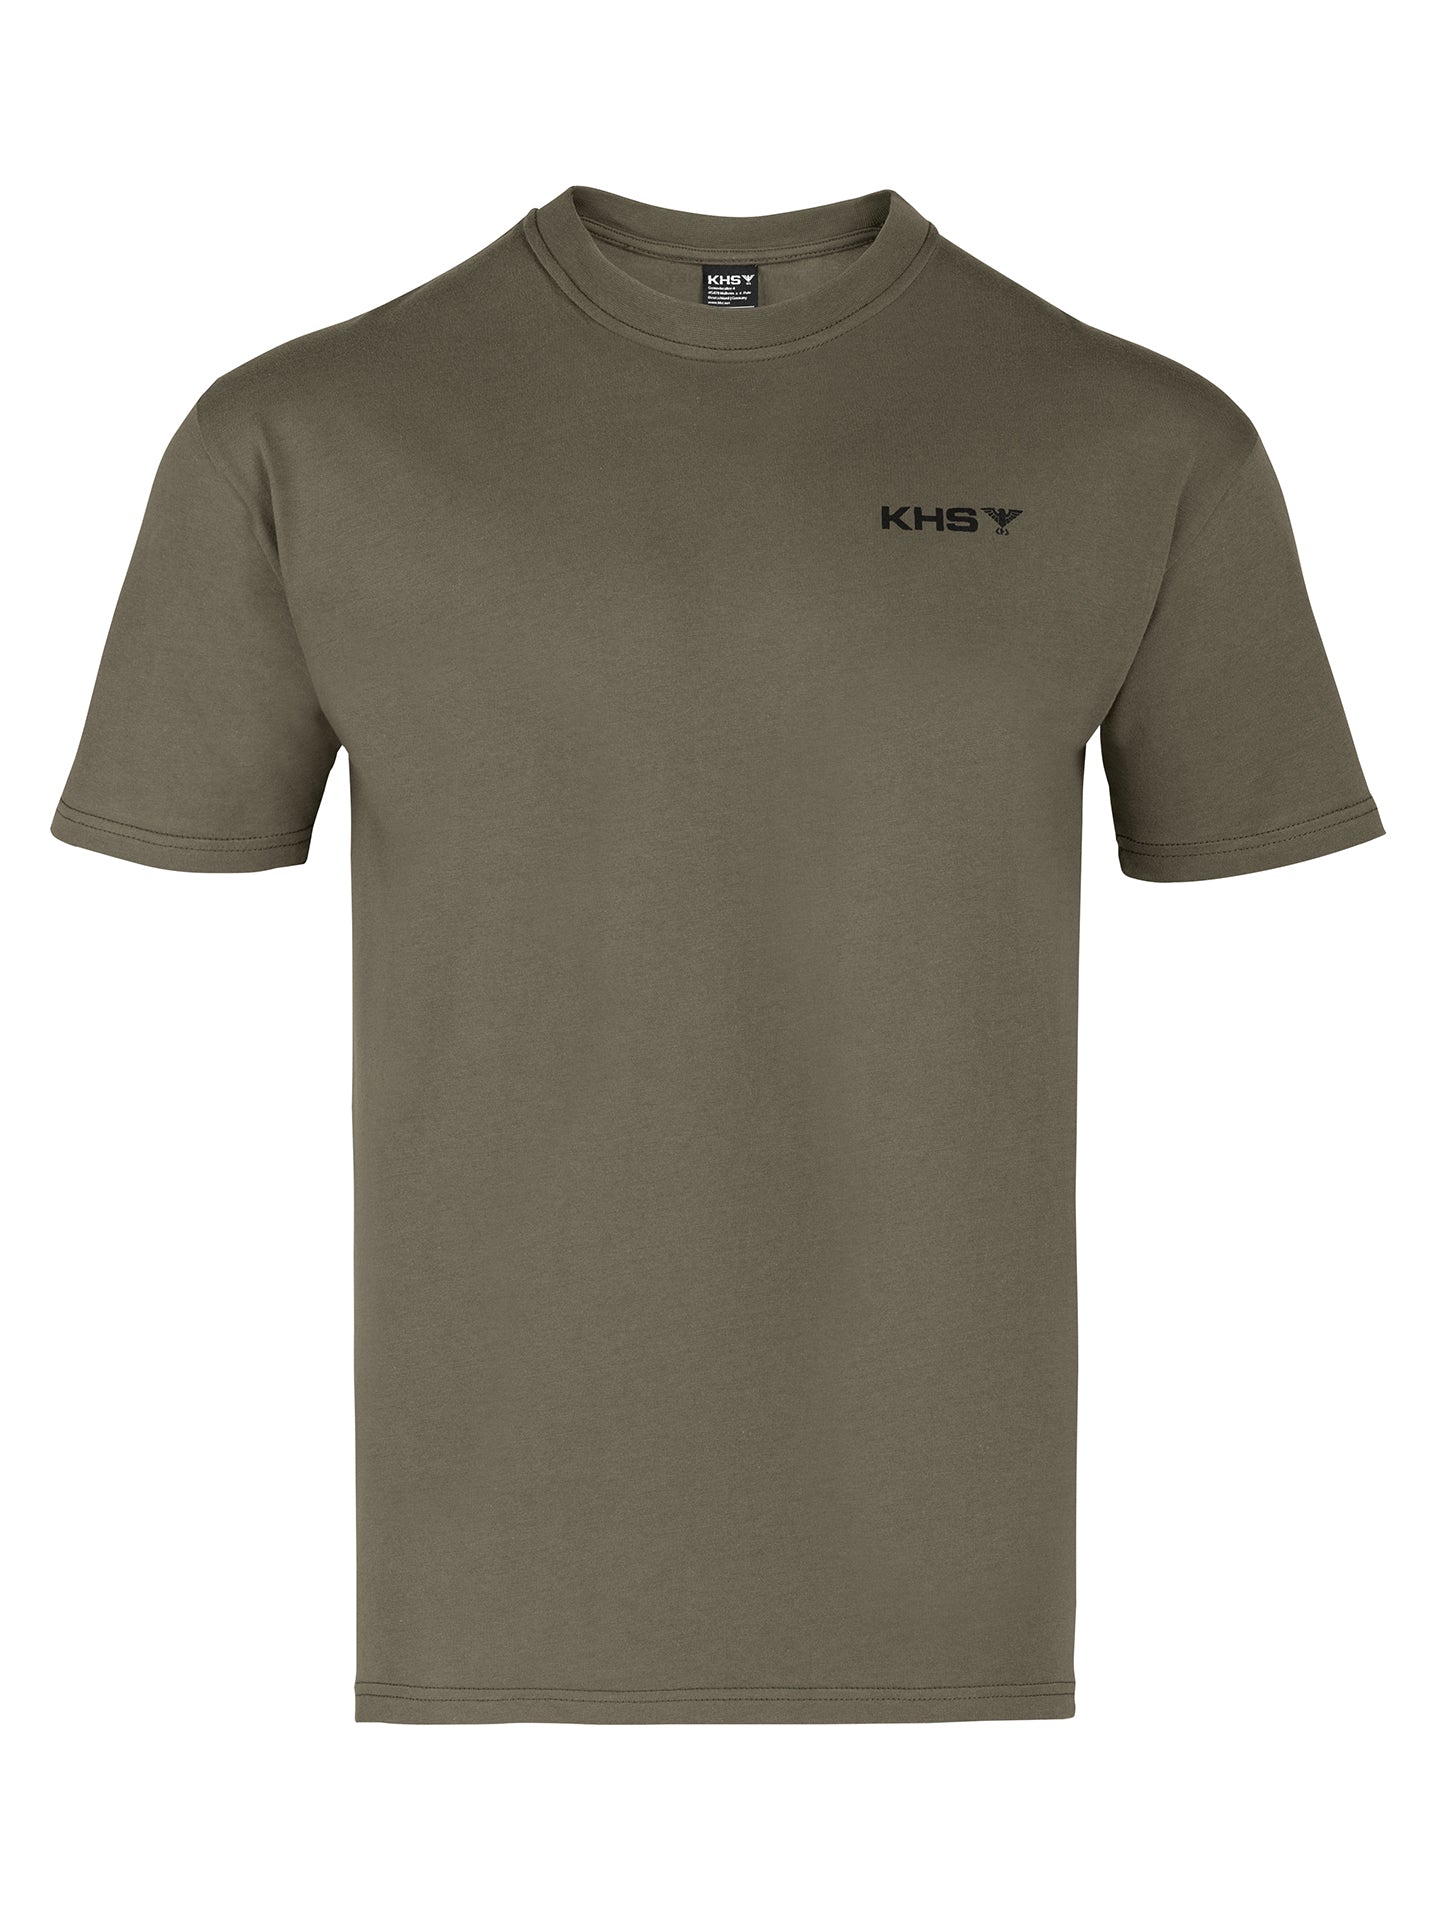 KHS T-Shirt Stone Grey Olive